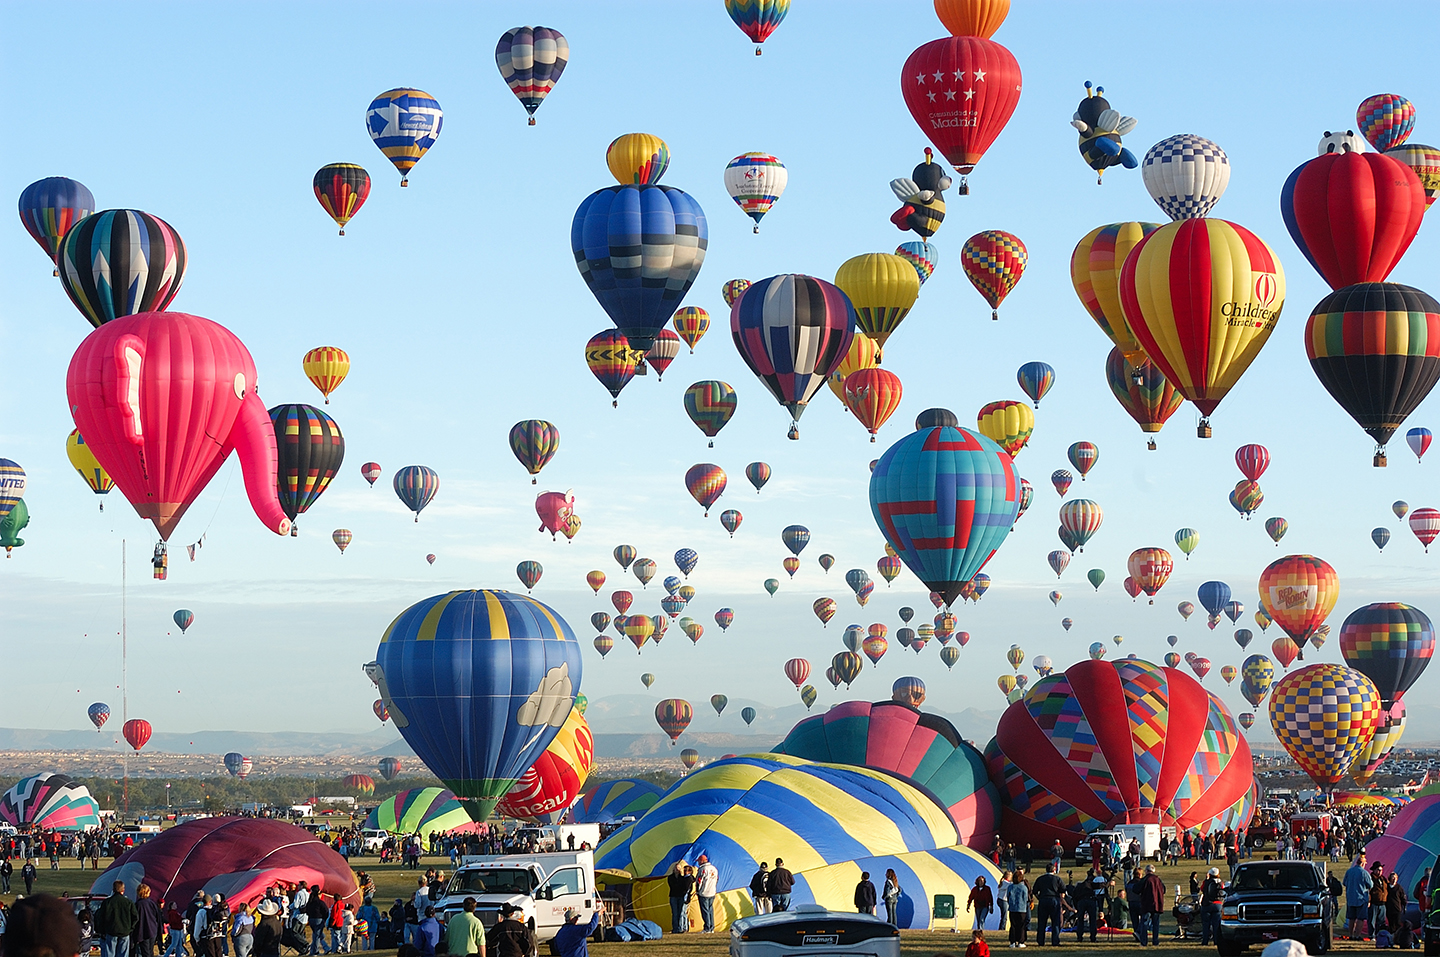 Lễ hội Khinh khí cầu Quốc tế Albuquerque năm 2007, ở Albuquerque, tiểu bang New Mexico. (Ảnh: a4gpa/CC BY-SA 2.0)